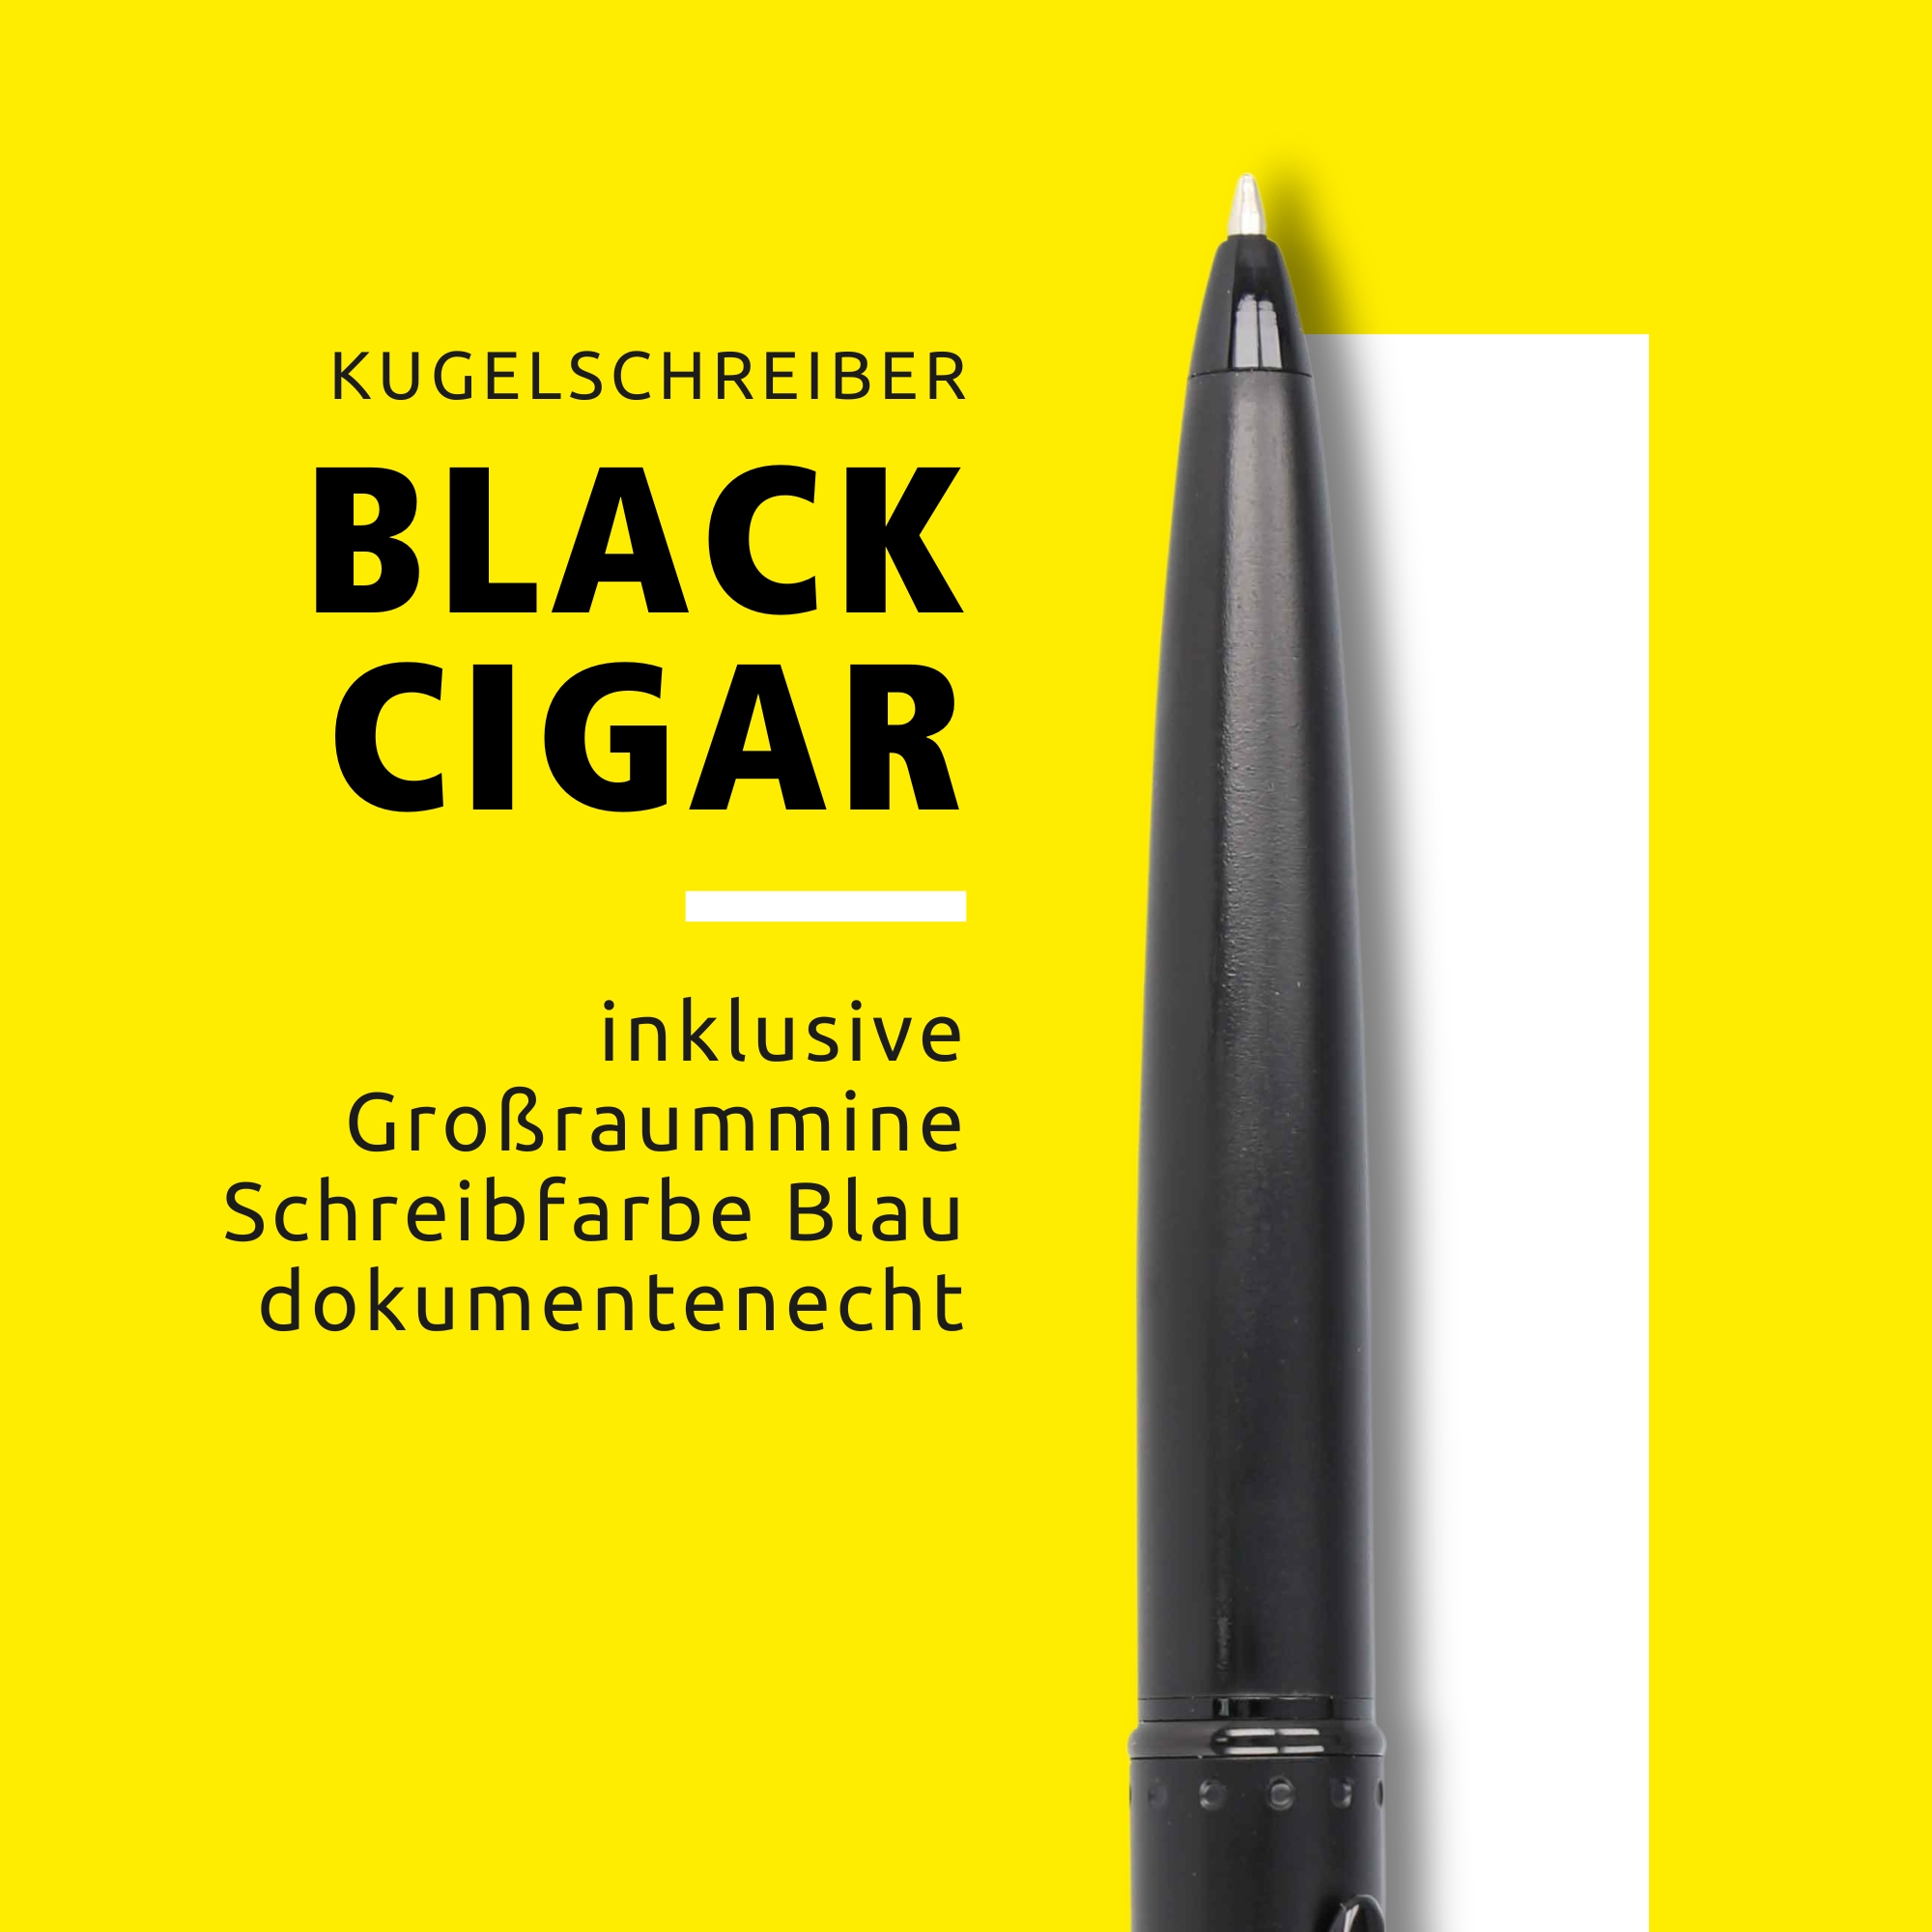 Kugelschreiber Black Cigar inklusive internationaler Großraummine